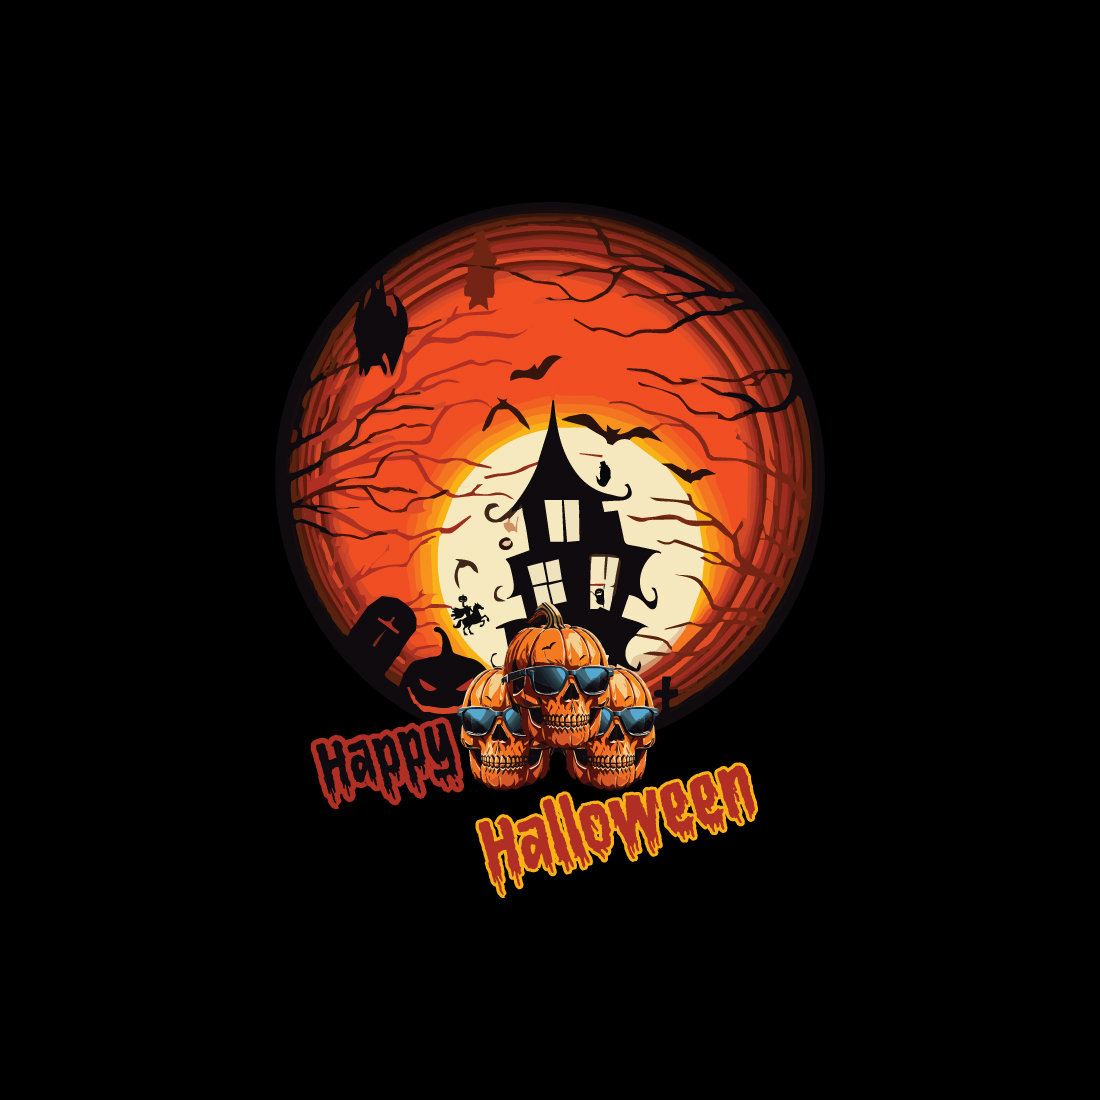 Halloween T shirt Design - t shirt for halloween preview image.